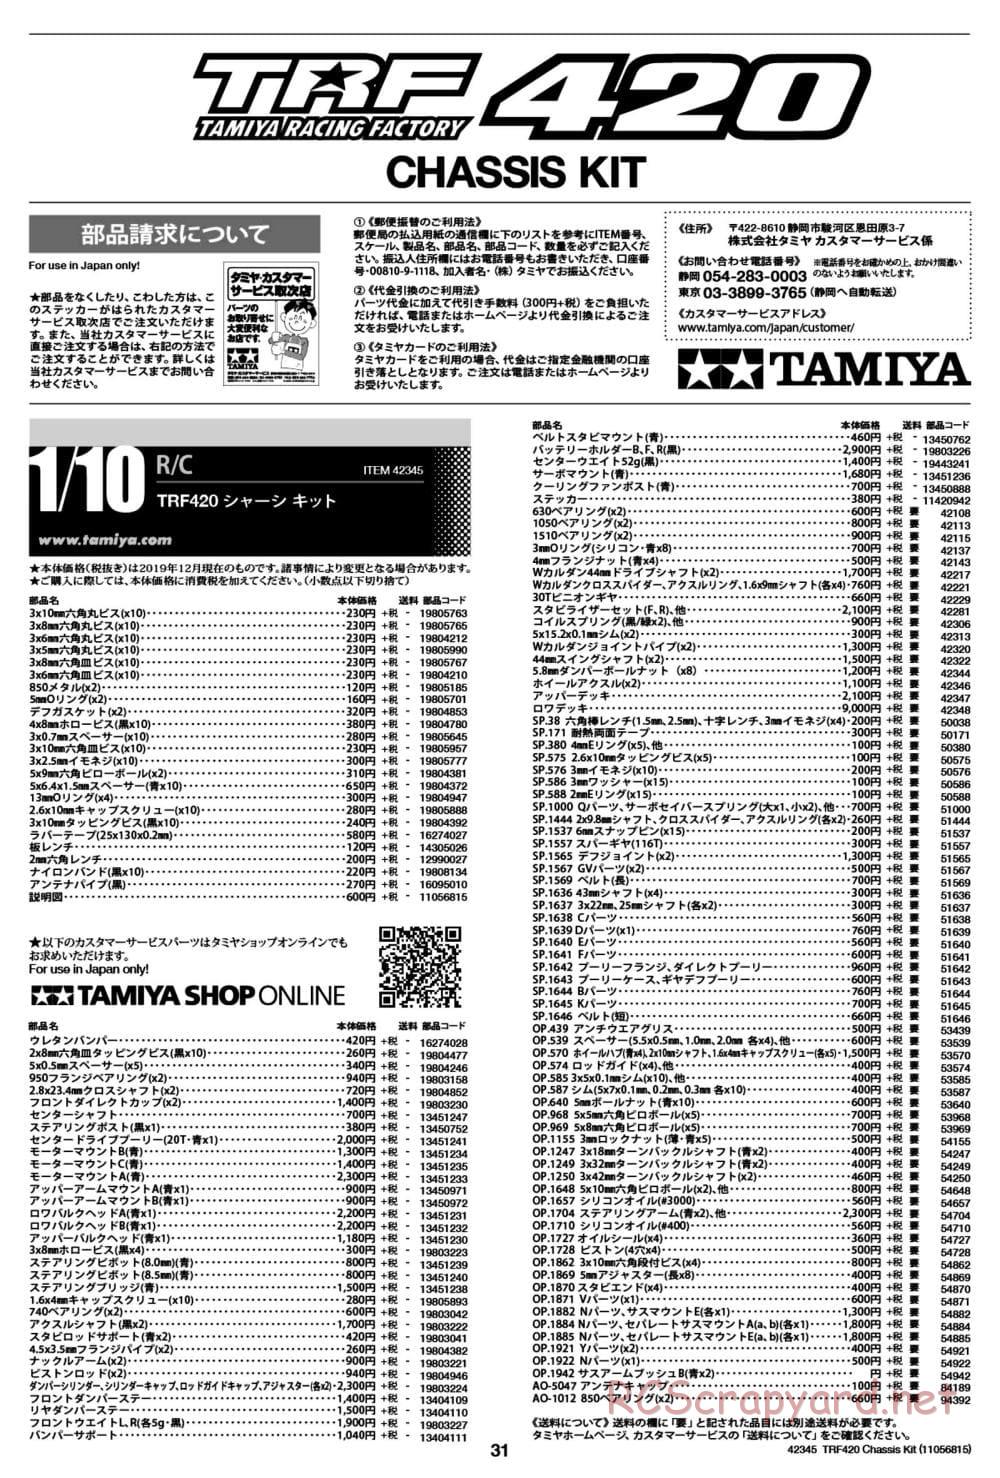 Tamiya - TRF420 Chassis - Manual - Page 31